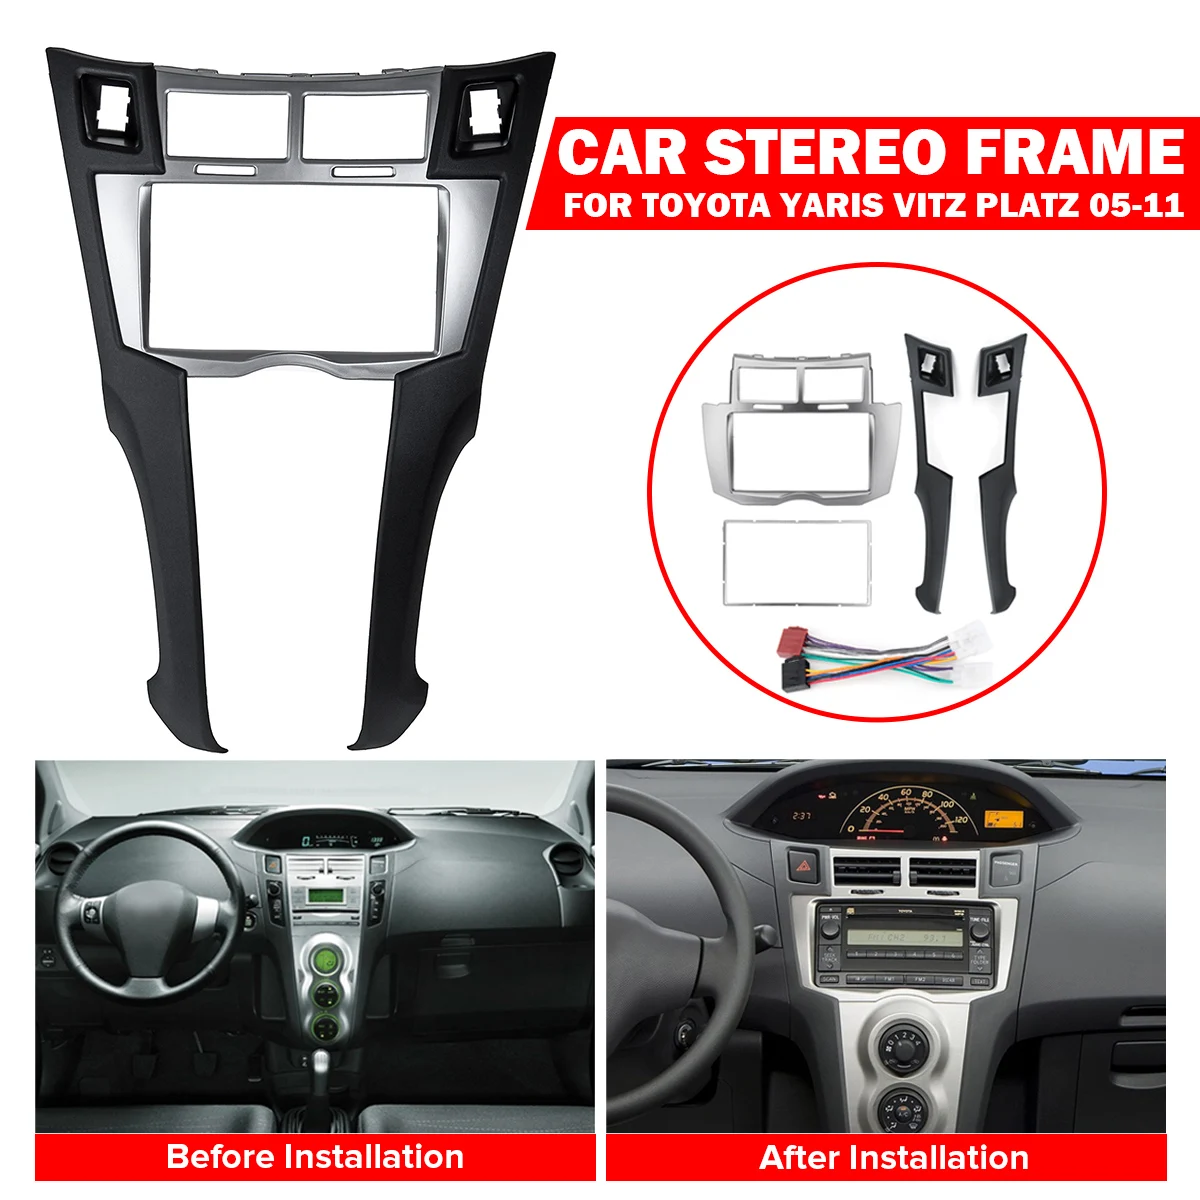 

2 DIN Car DVD/CD Radio Stereo Fascia Panel Frame Adaptor Fitting Kit For Toyota Yaris Vitz Platz 2005 2006 2007 2008 2009-2011